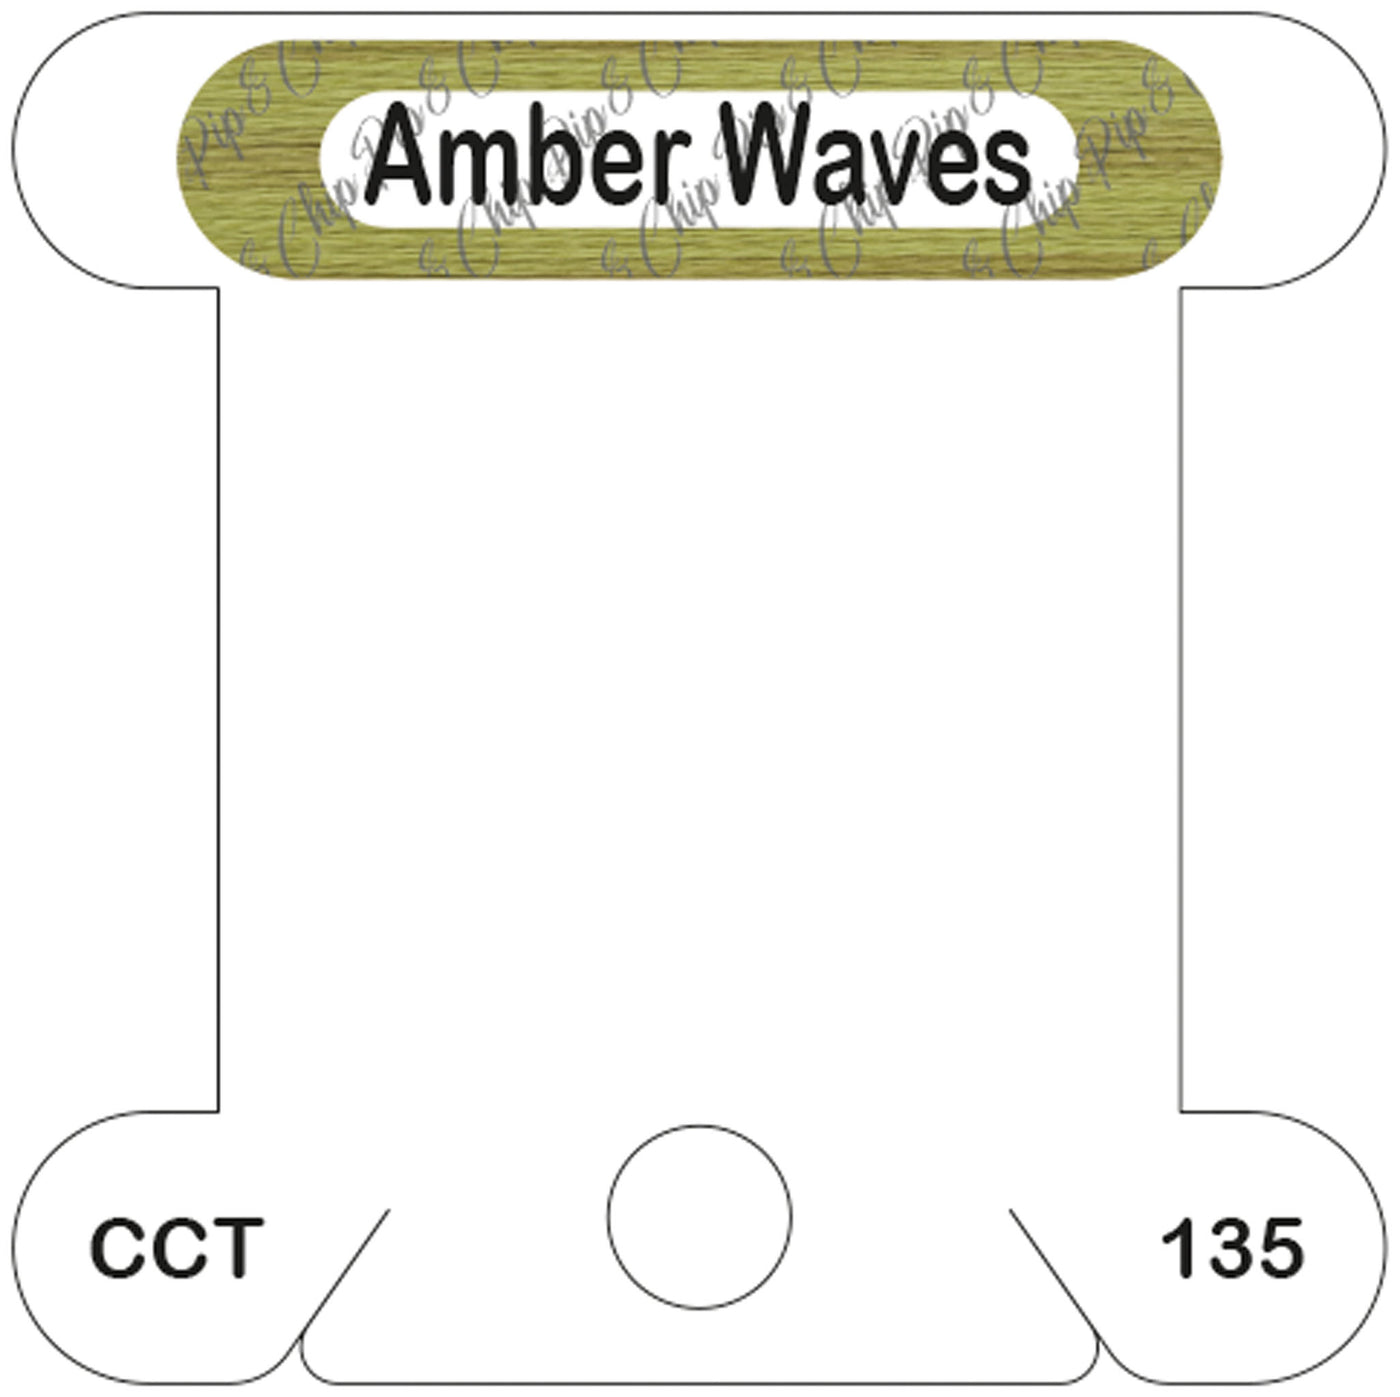 Classic Colorworks Amber Waves acrylic bobbin